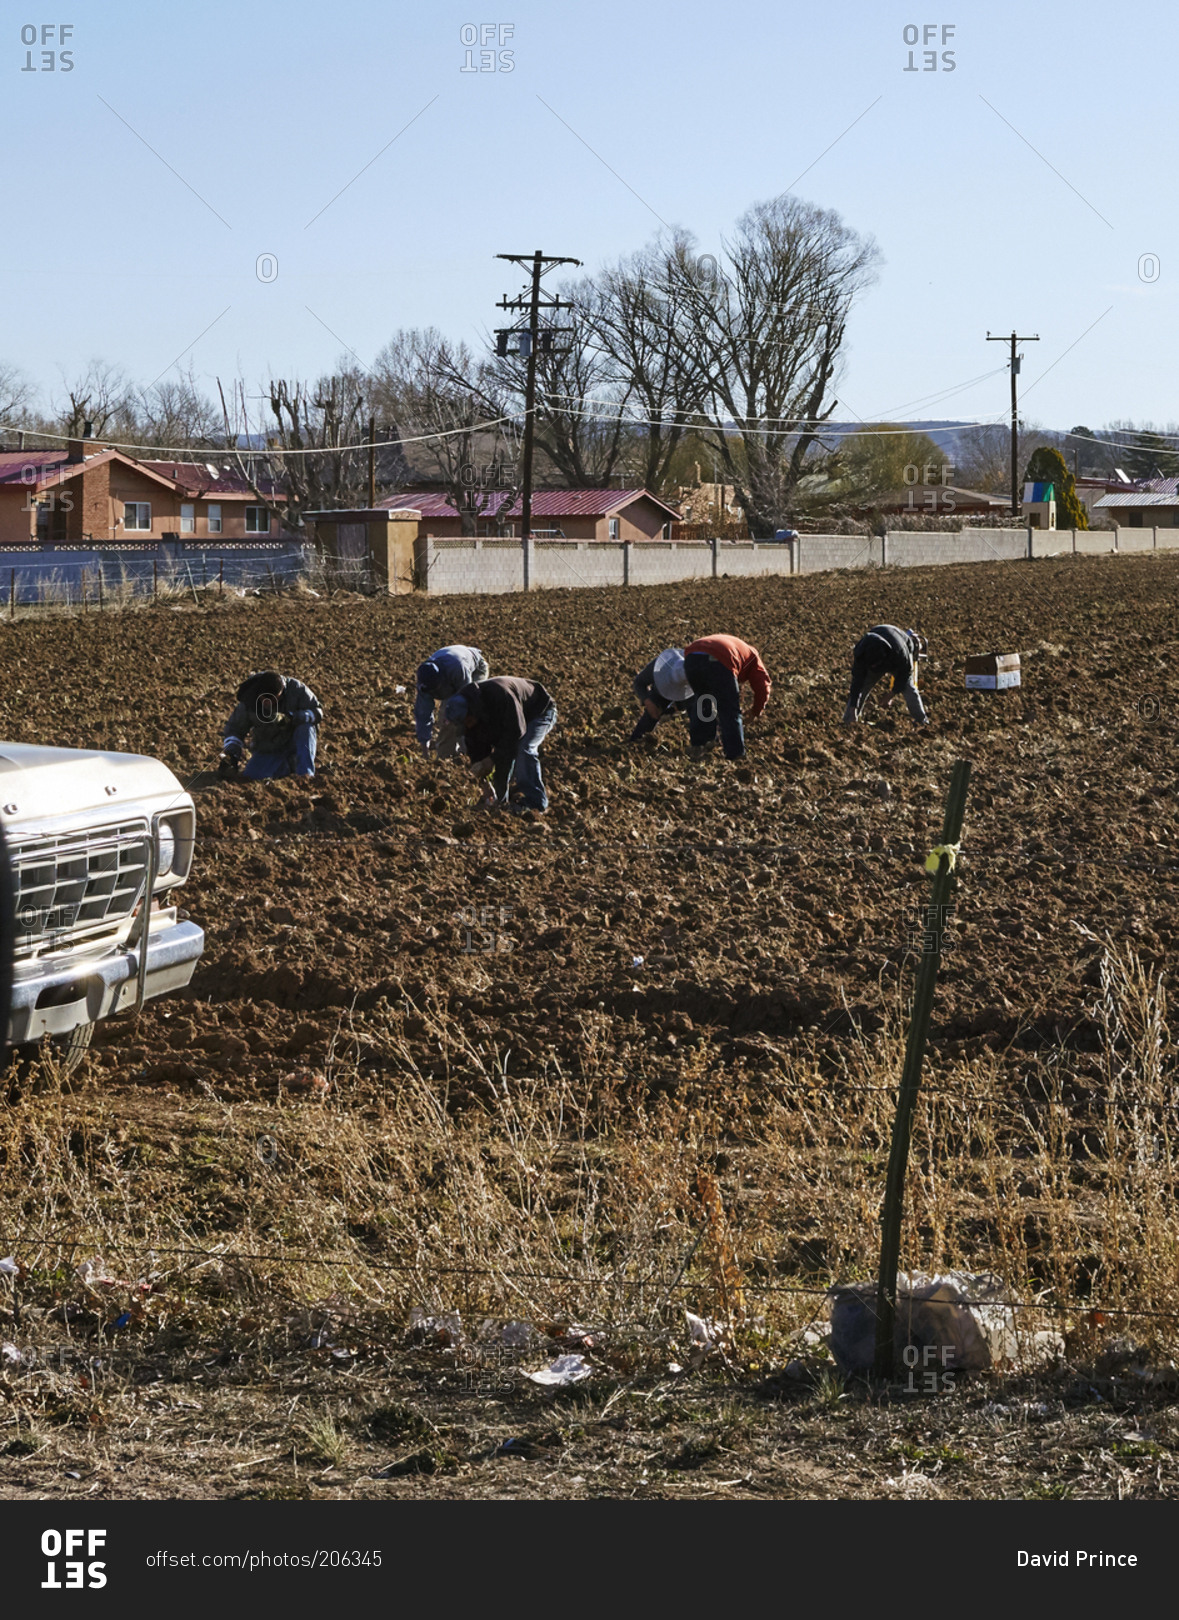 Farmhands working on an urban farm